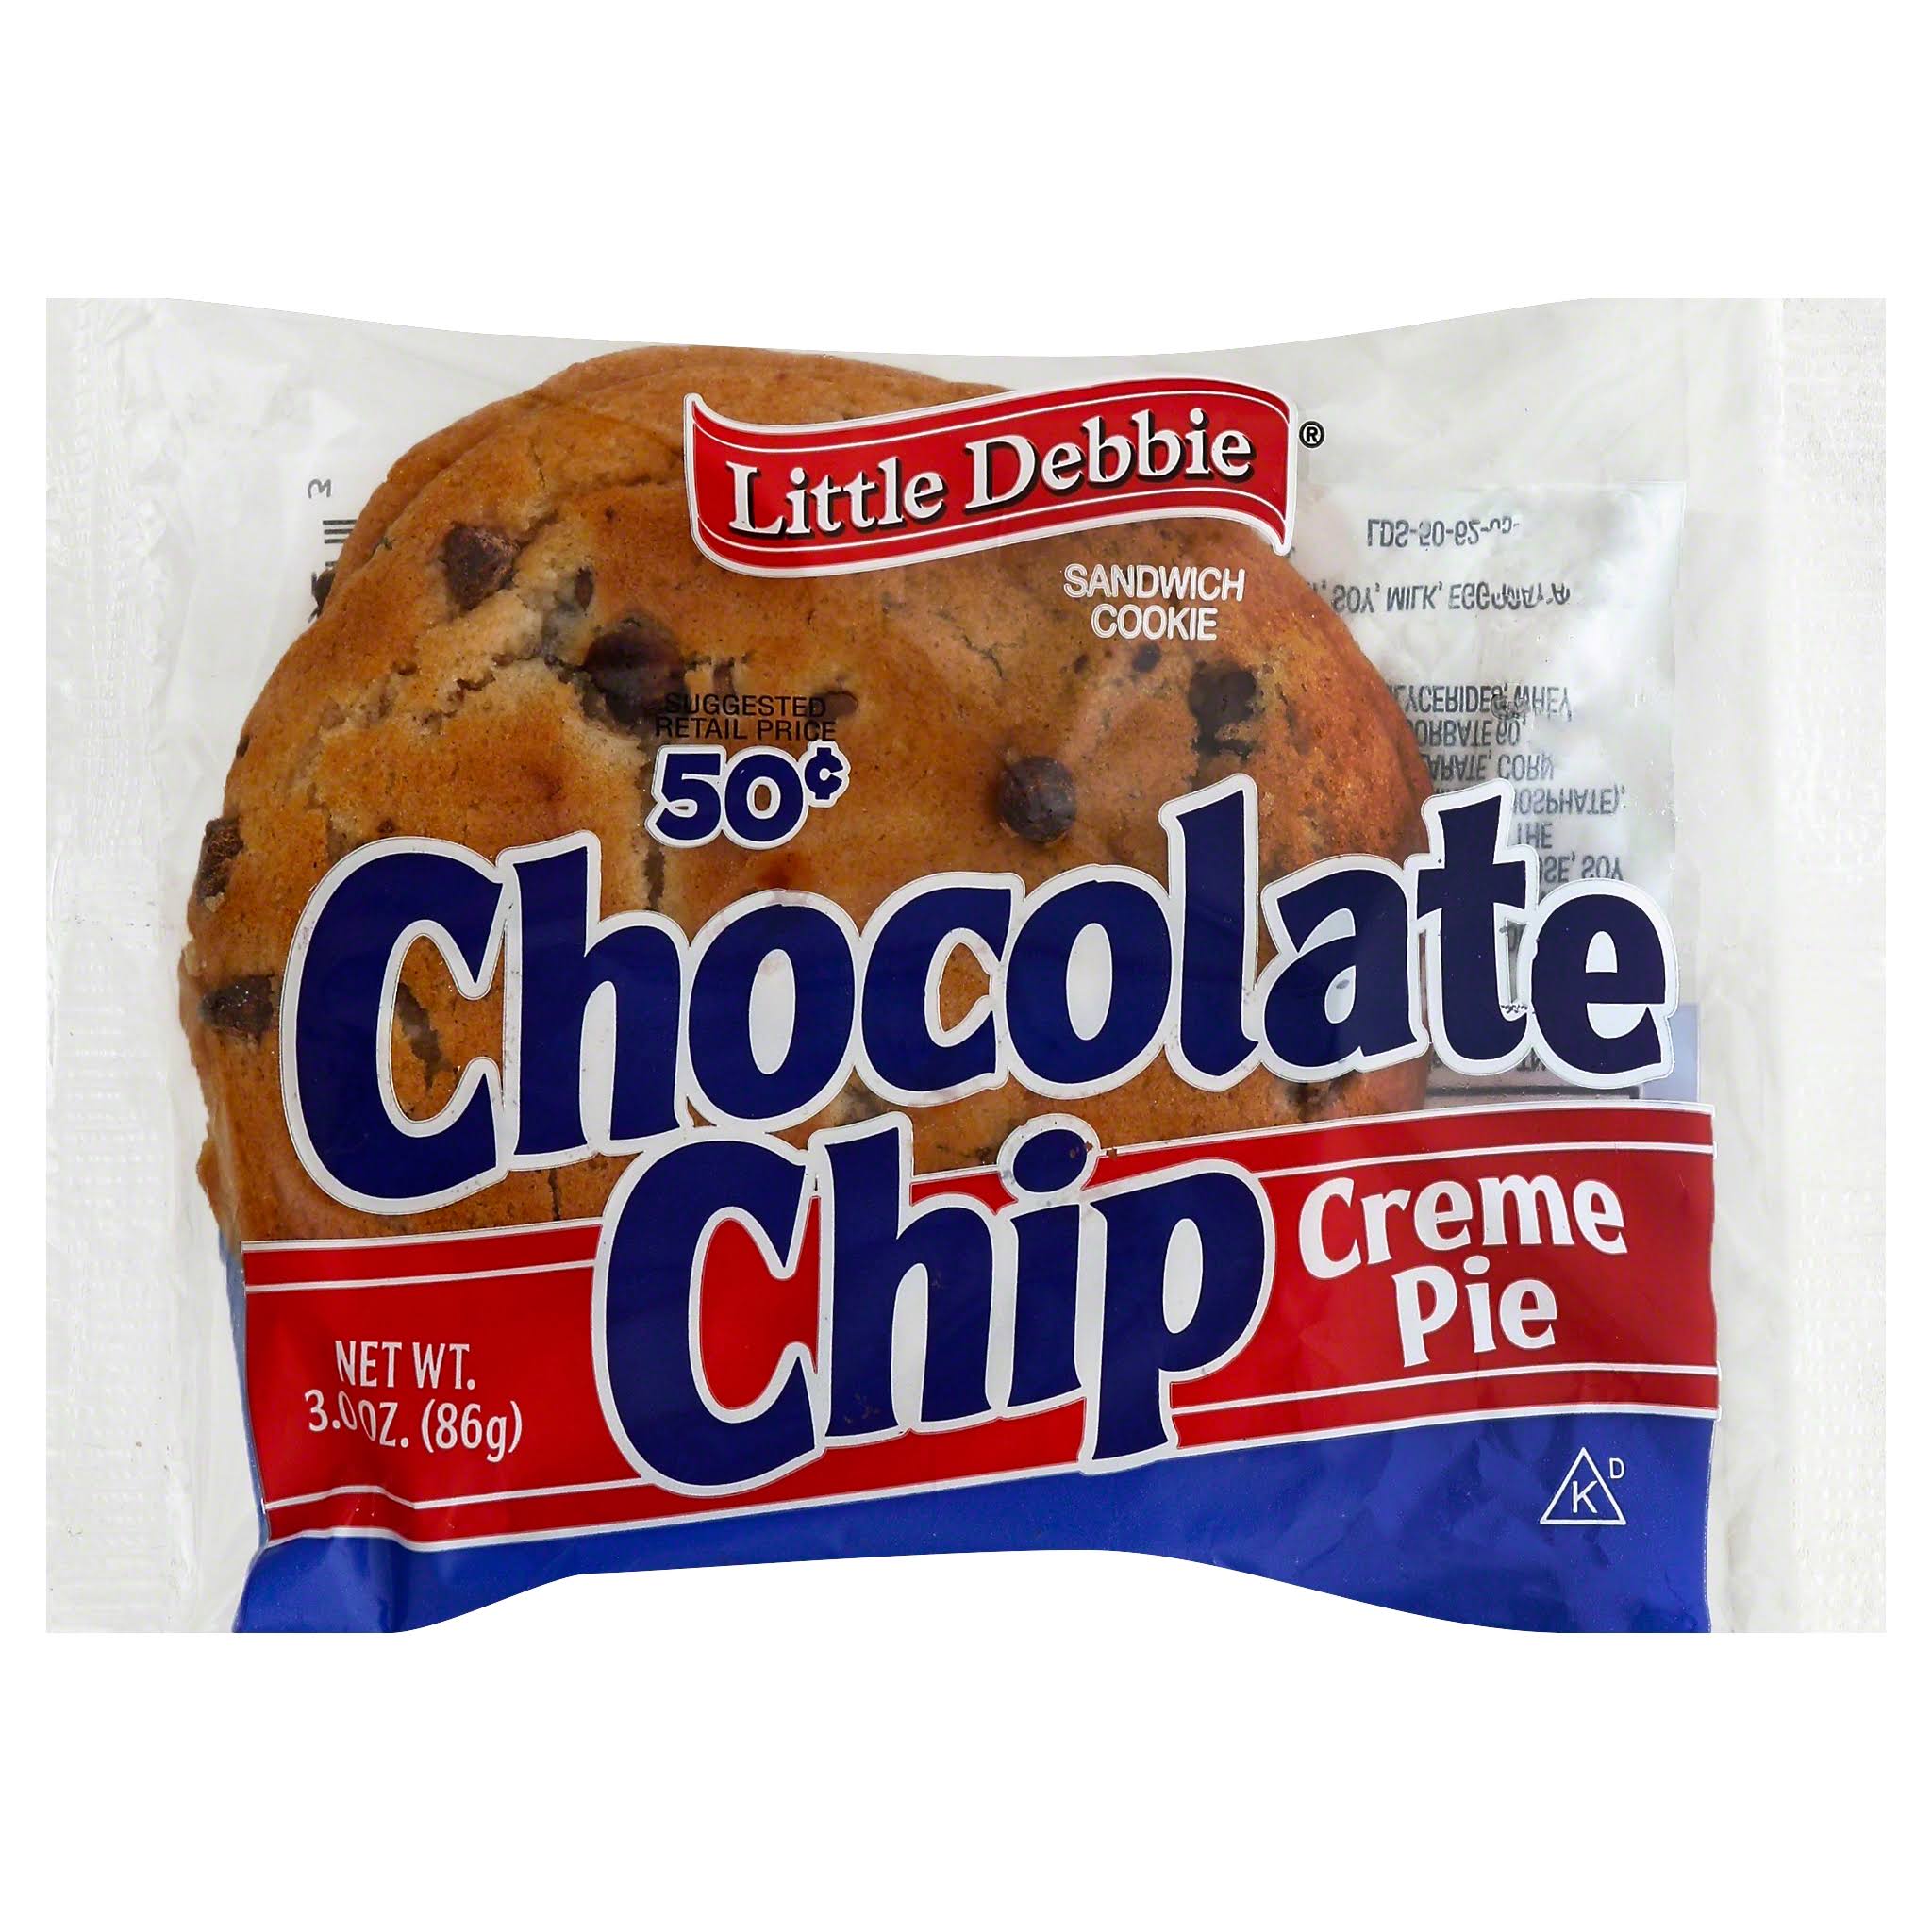 Little Debbie Chocolate Chip Creme Pie - 3oz